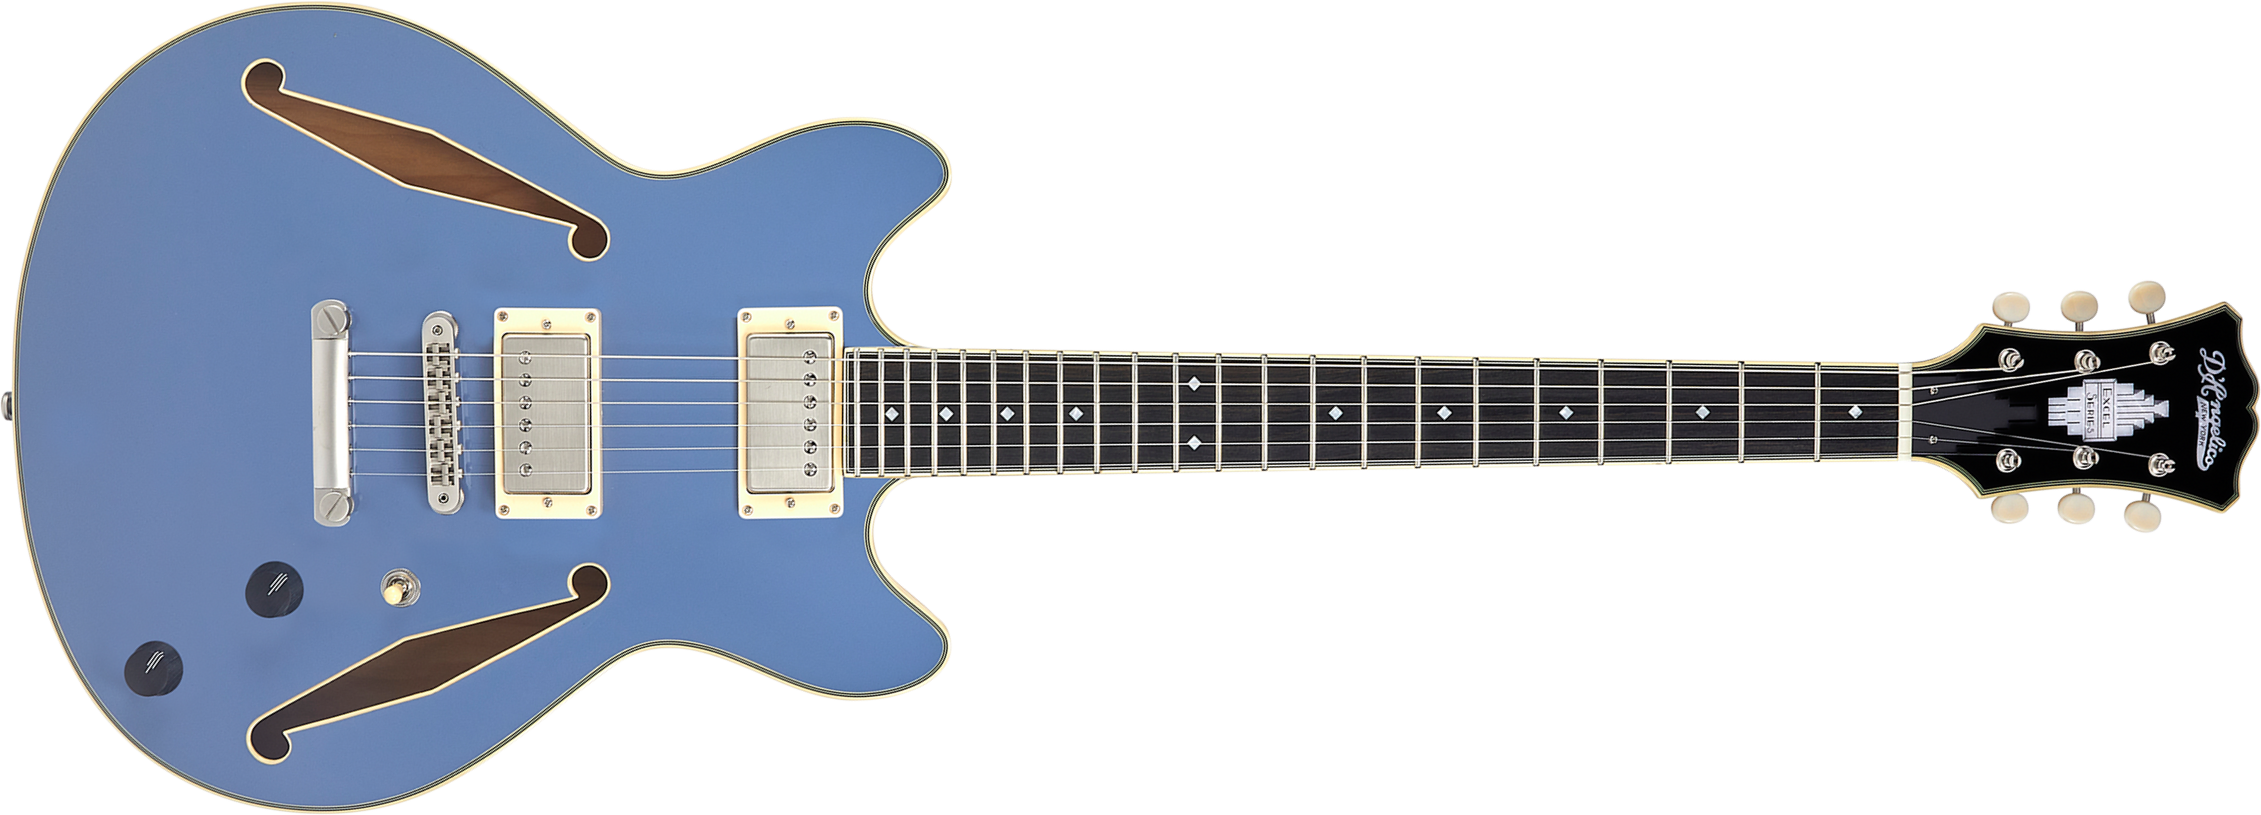 D'angelico Mini Dc Tour Excel 2h Ht Eb - Slate Blue - Semi-hollow electric guitar - Main picture